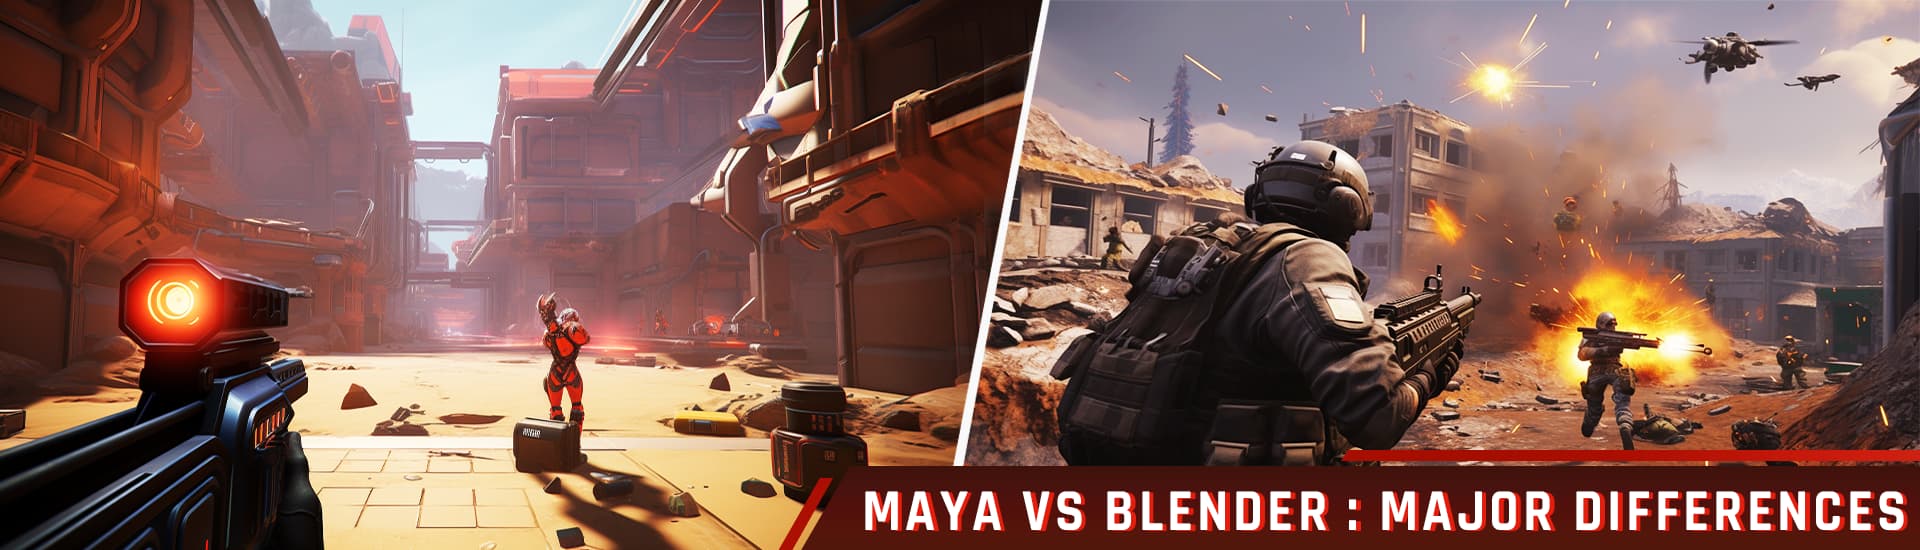 Maya vs Blender